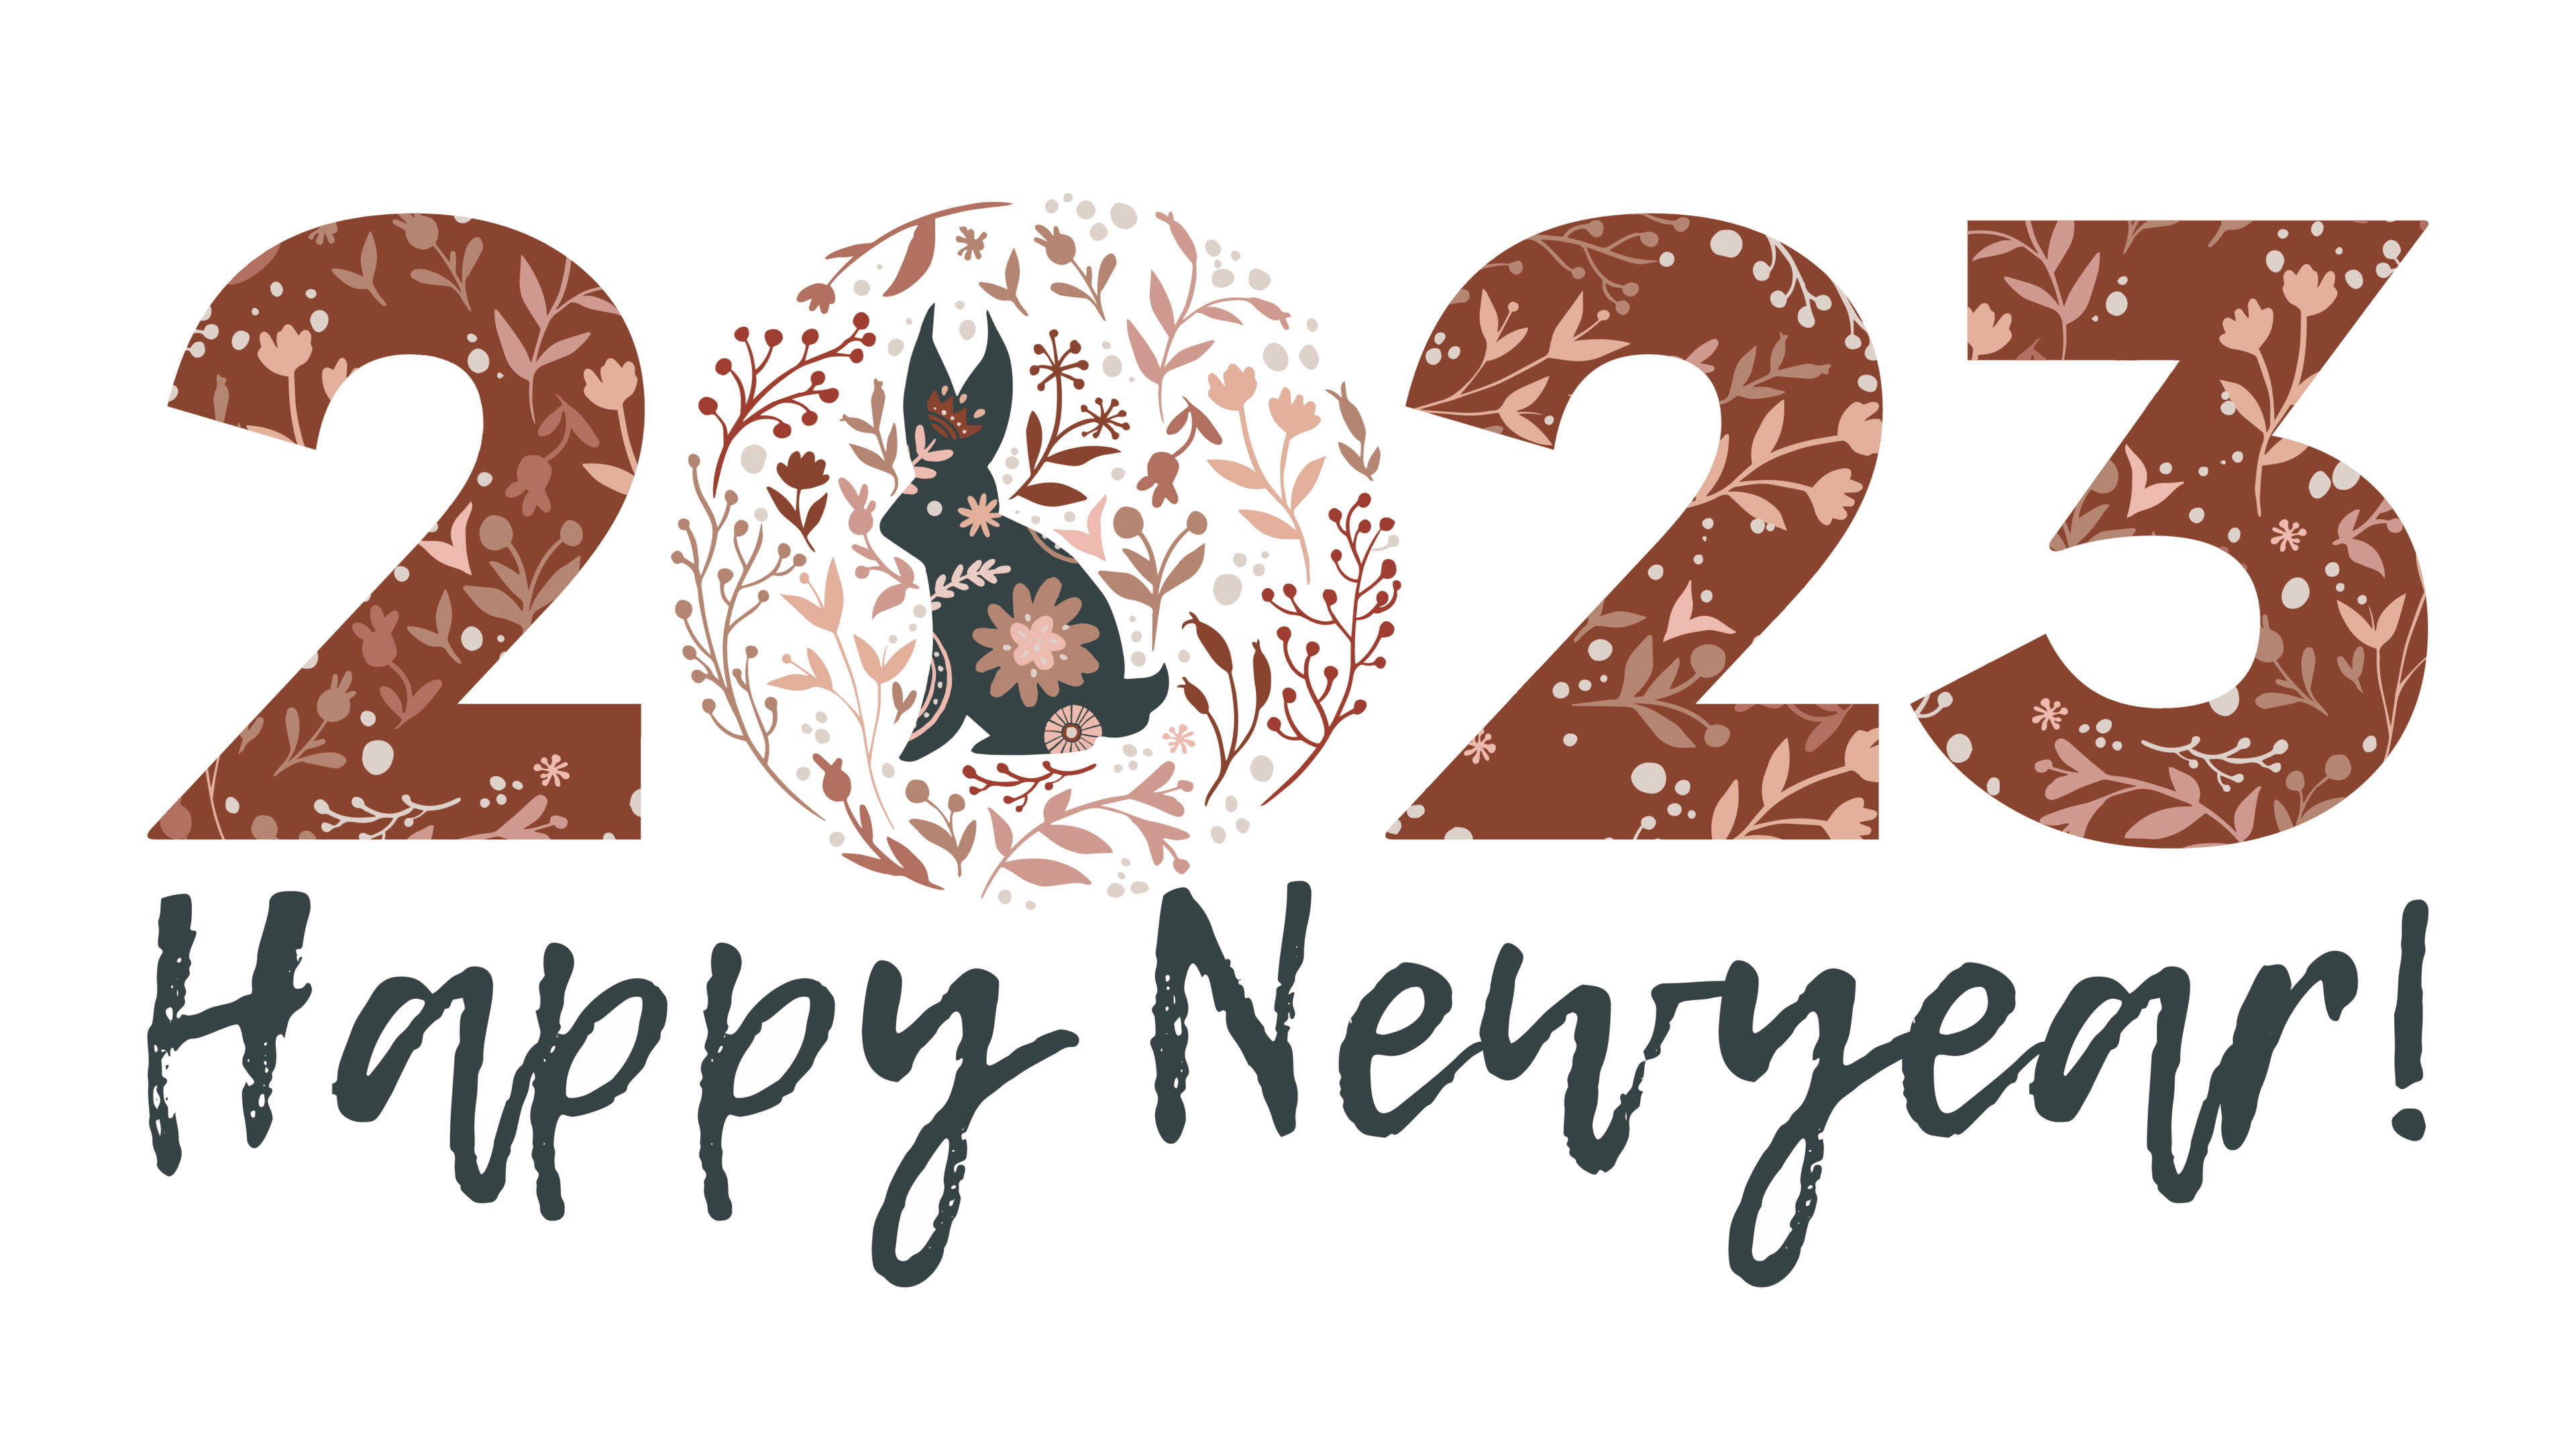 Free Happy New Year 2023 Wallpaper Downloads, Happy New Year 2023 Wallpaper for FREE